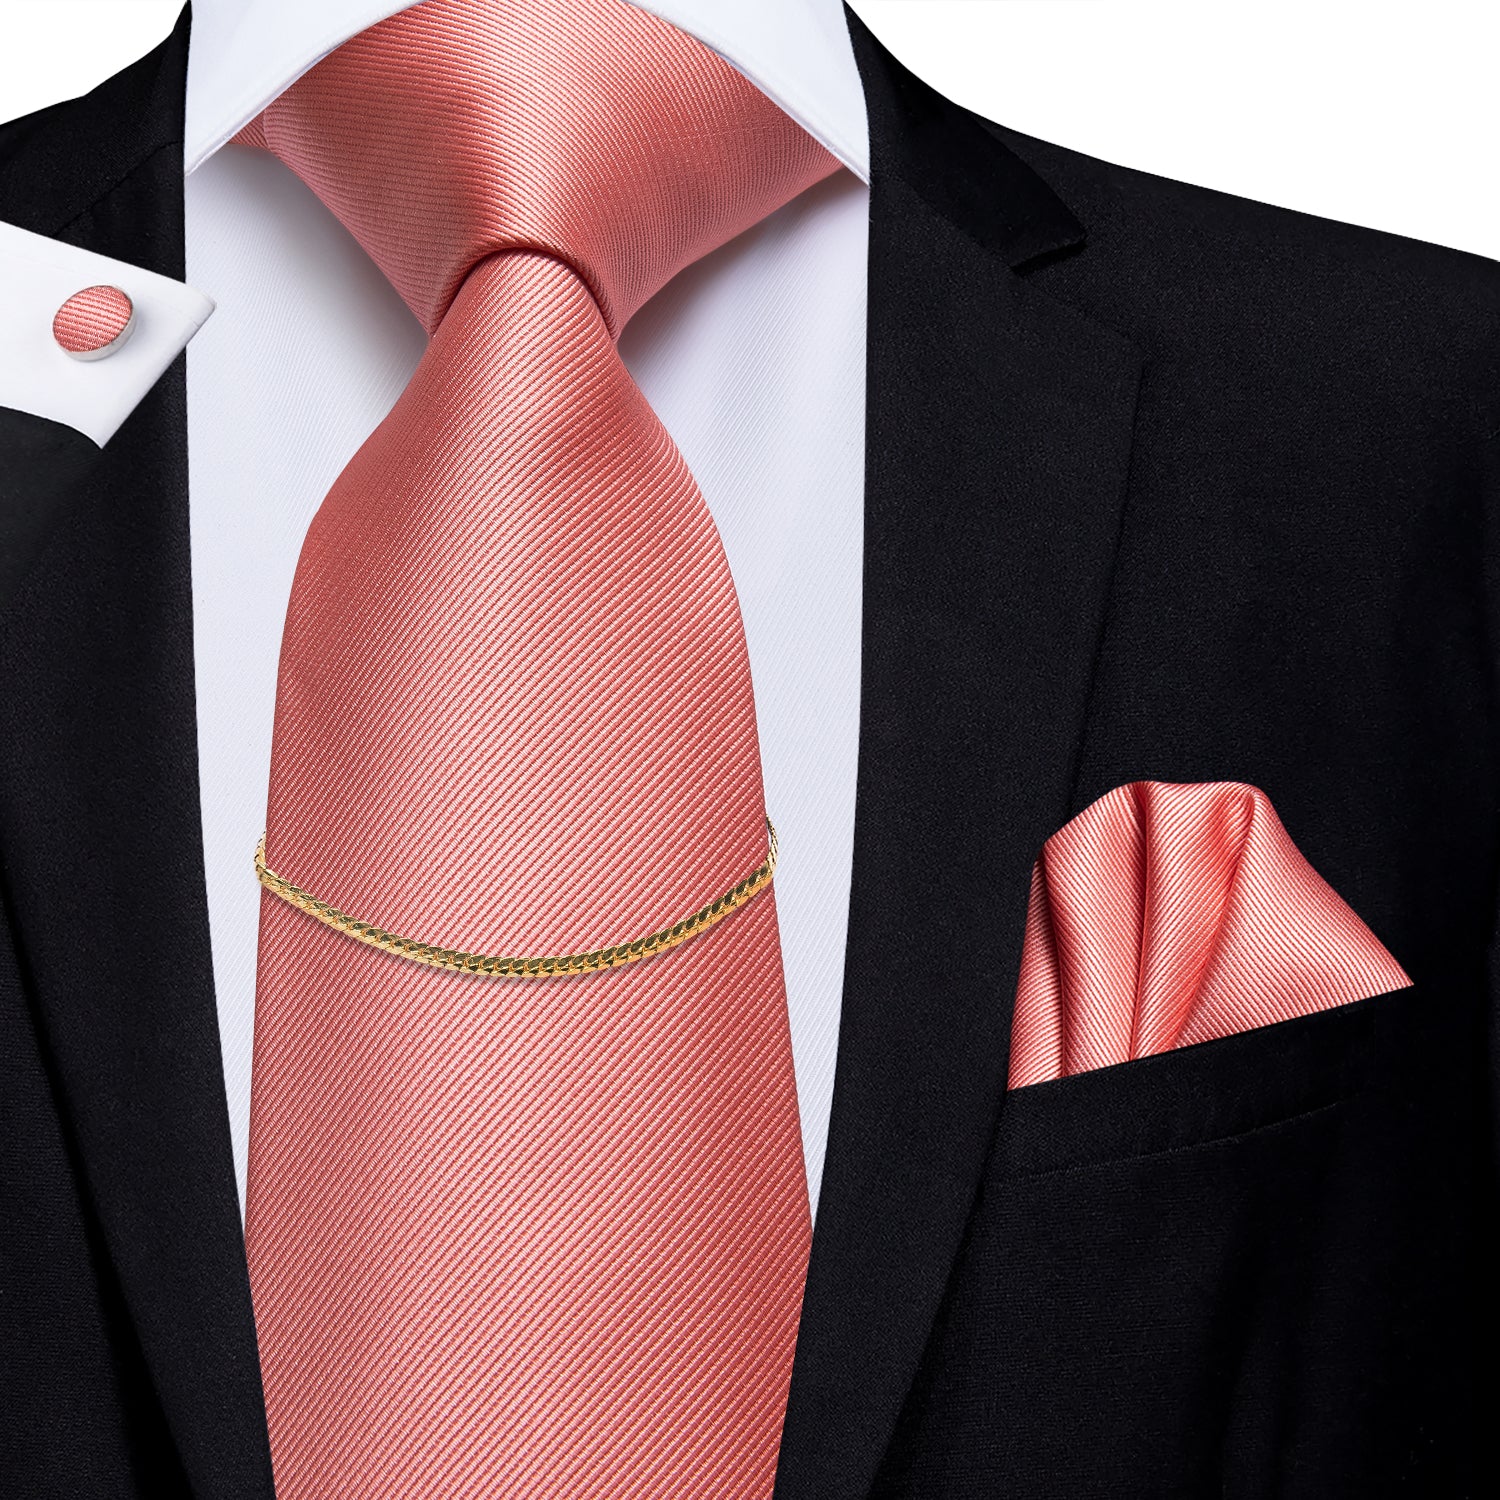 Coral solid Tie Handkerchief Cufflinks Set With Golden Chain